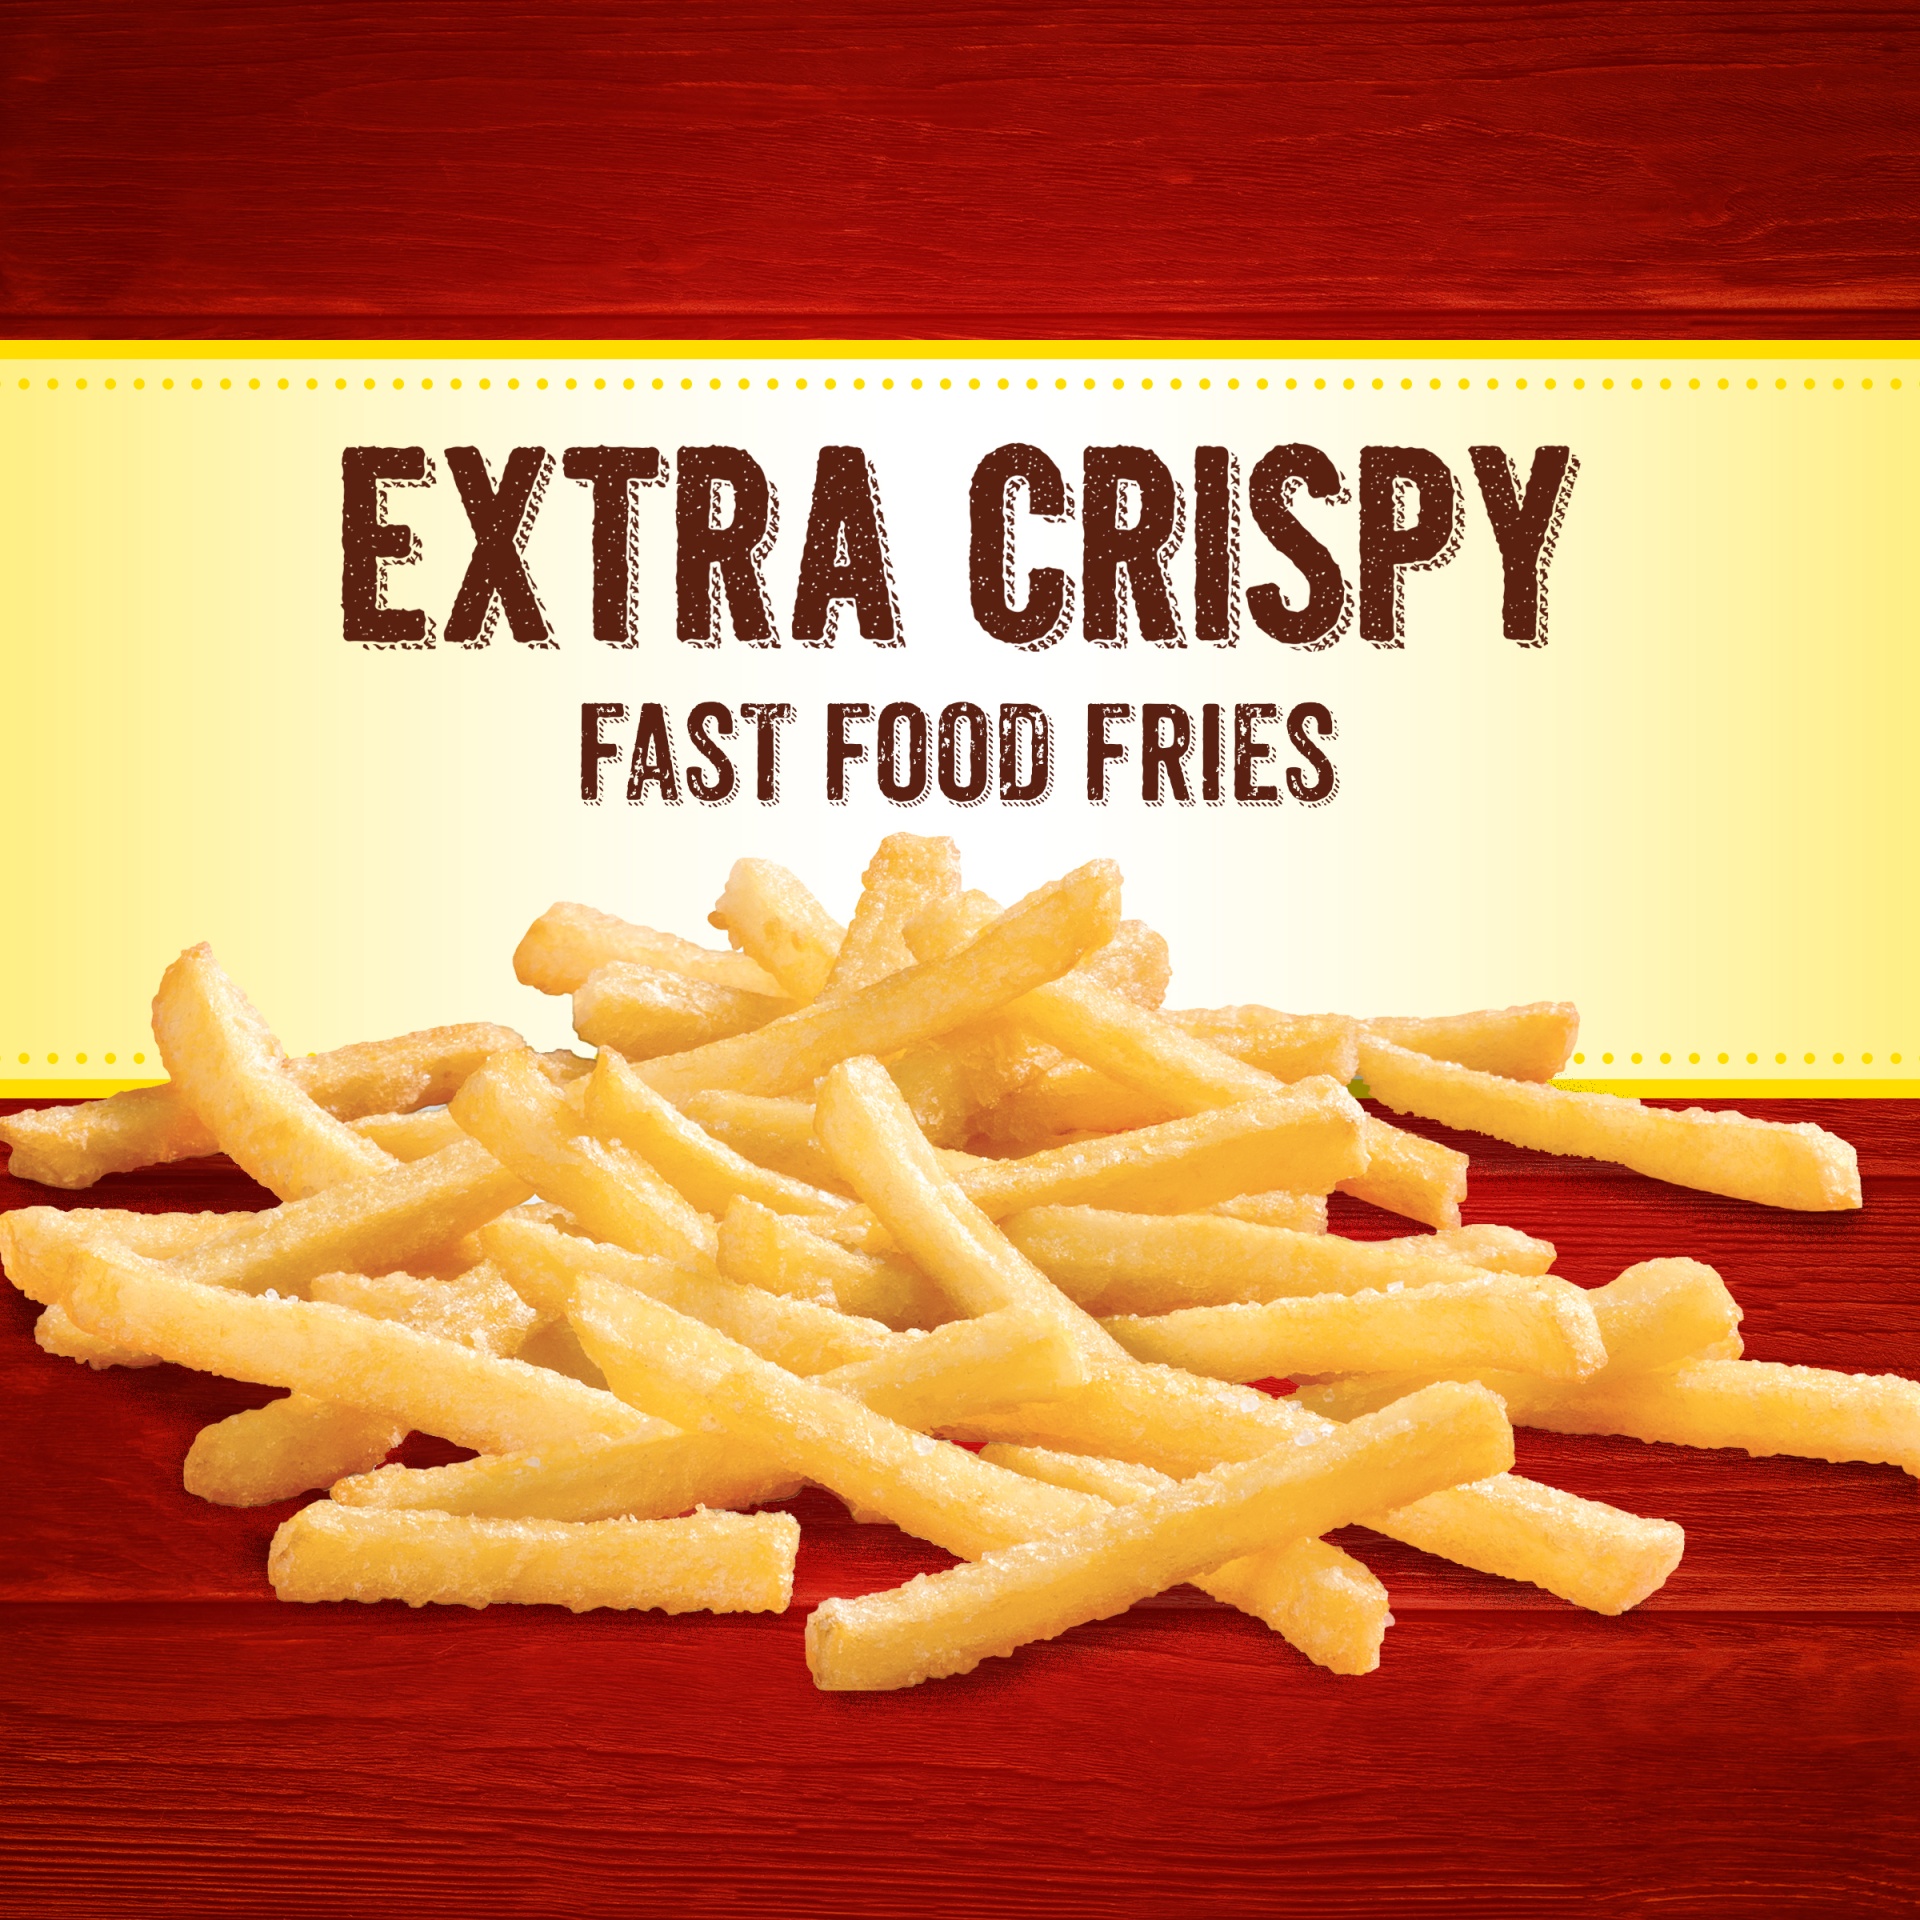 slide 2 of 8, Ore-Ida Extra Crispy Fast Food French Fries Fried Frozen Potatoes, 26 oz